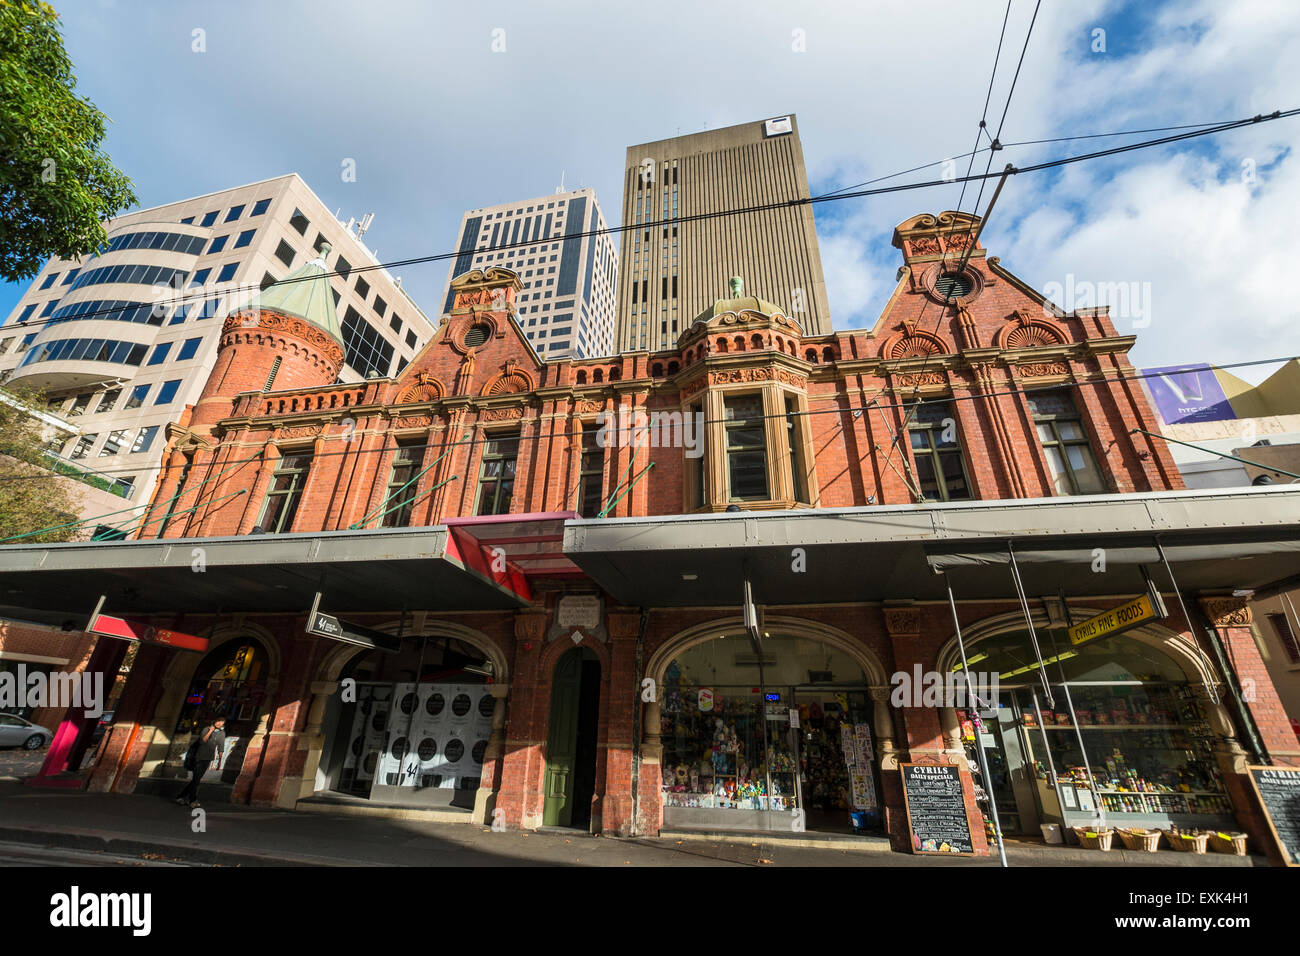 Row of shops in a historical building, Hay Street, Haymarket, Sydney, Australia Stock Photo